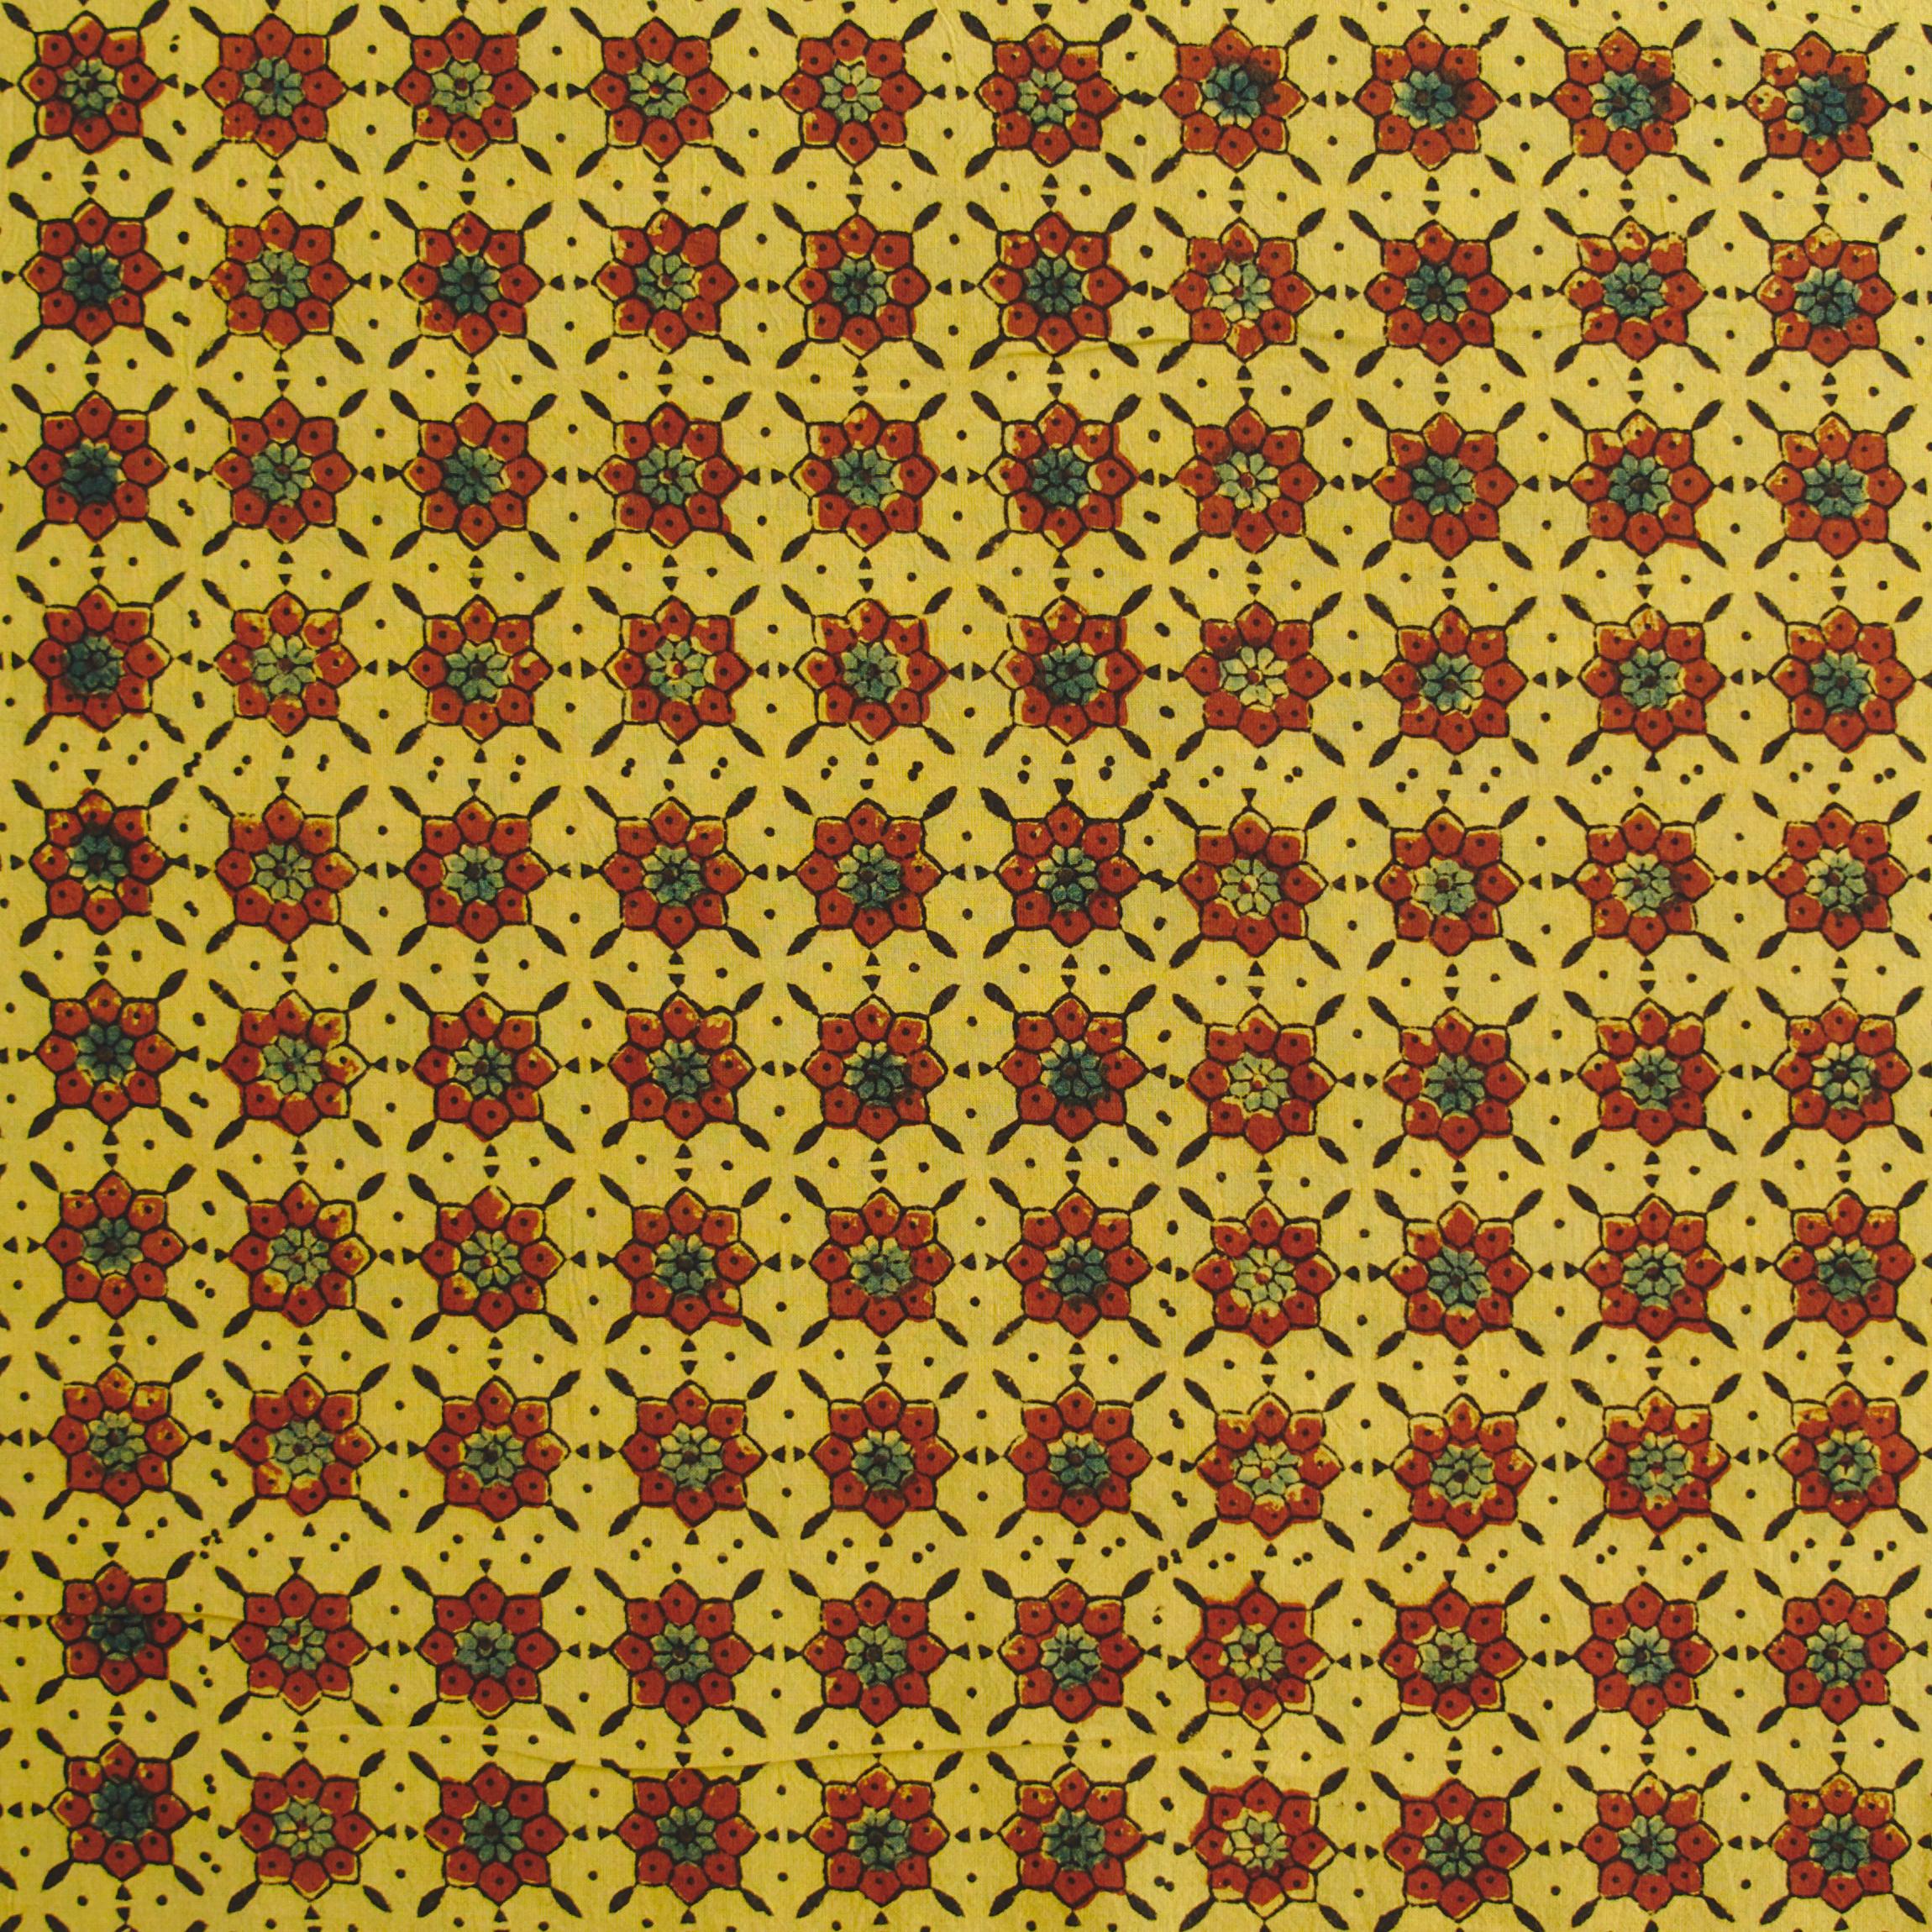 100% Printed Cotton - Starburst Print - Turmeric Yellow, Alizarin Red, Black, Indigo - Flat